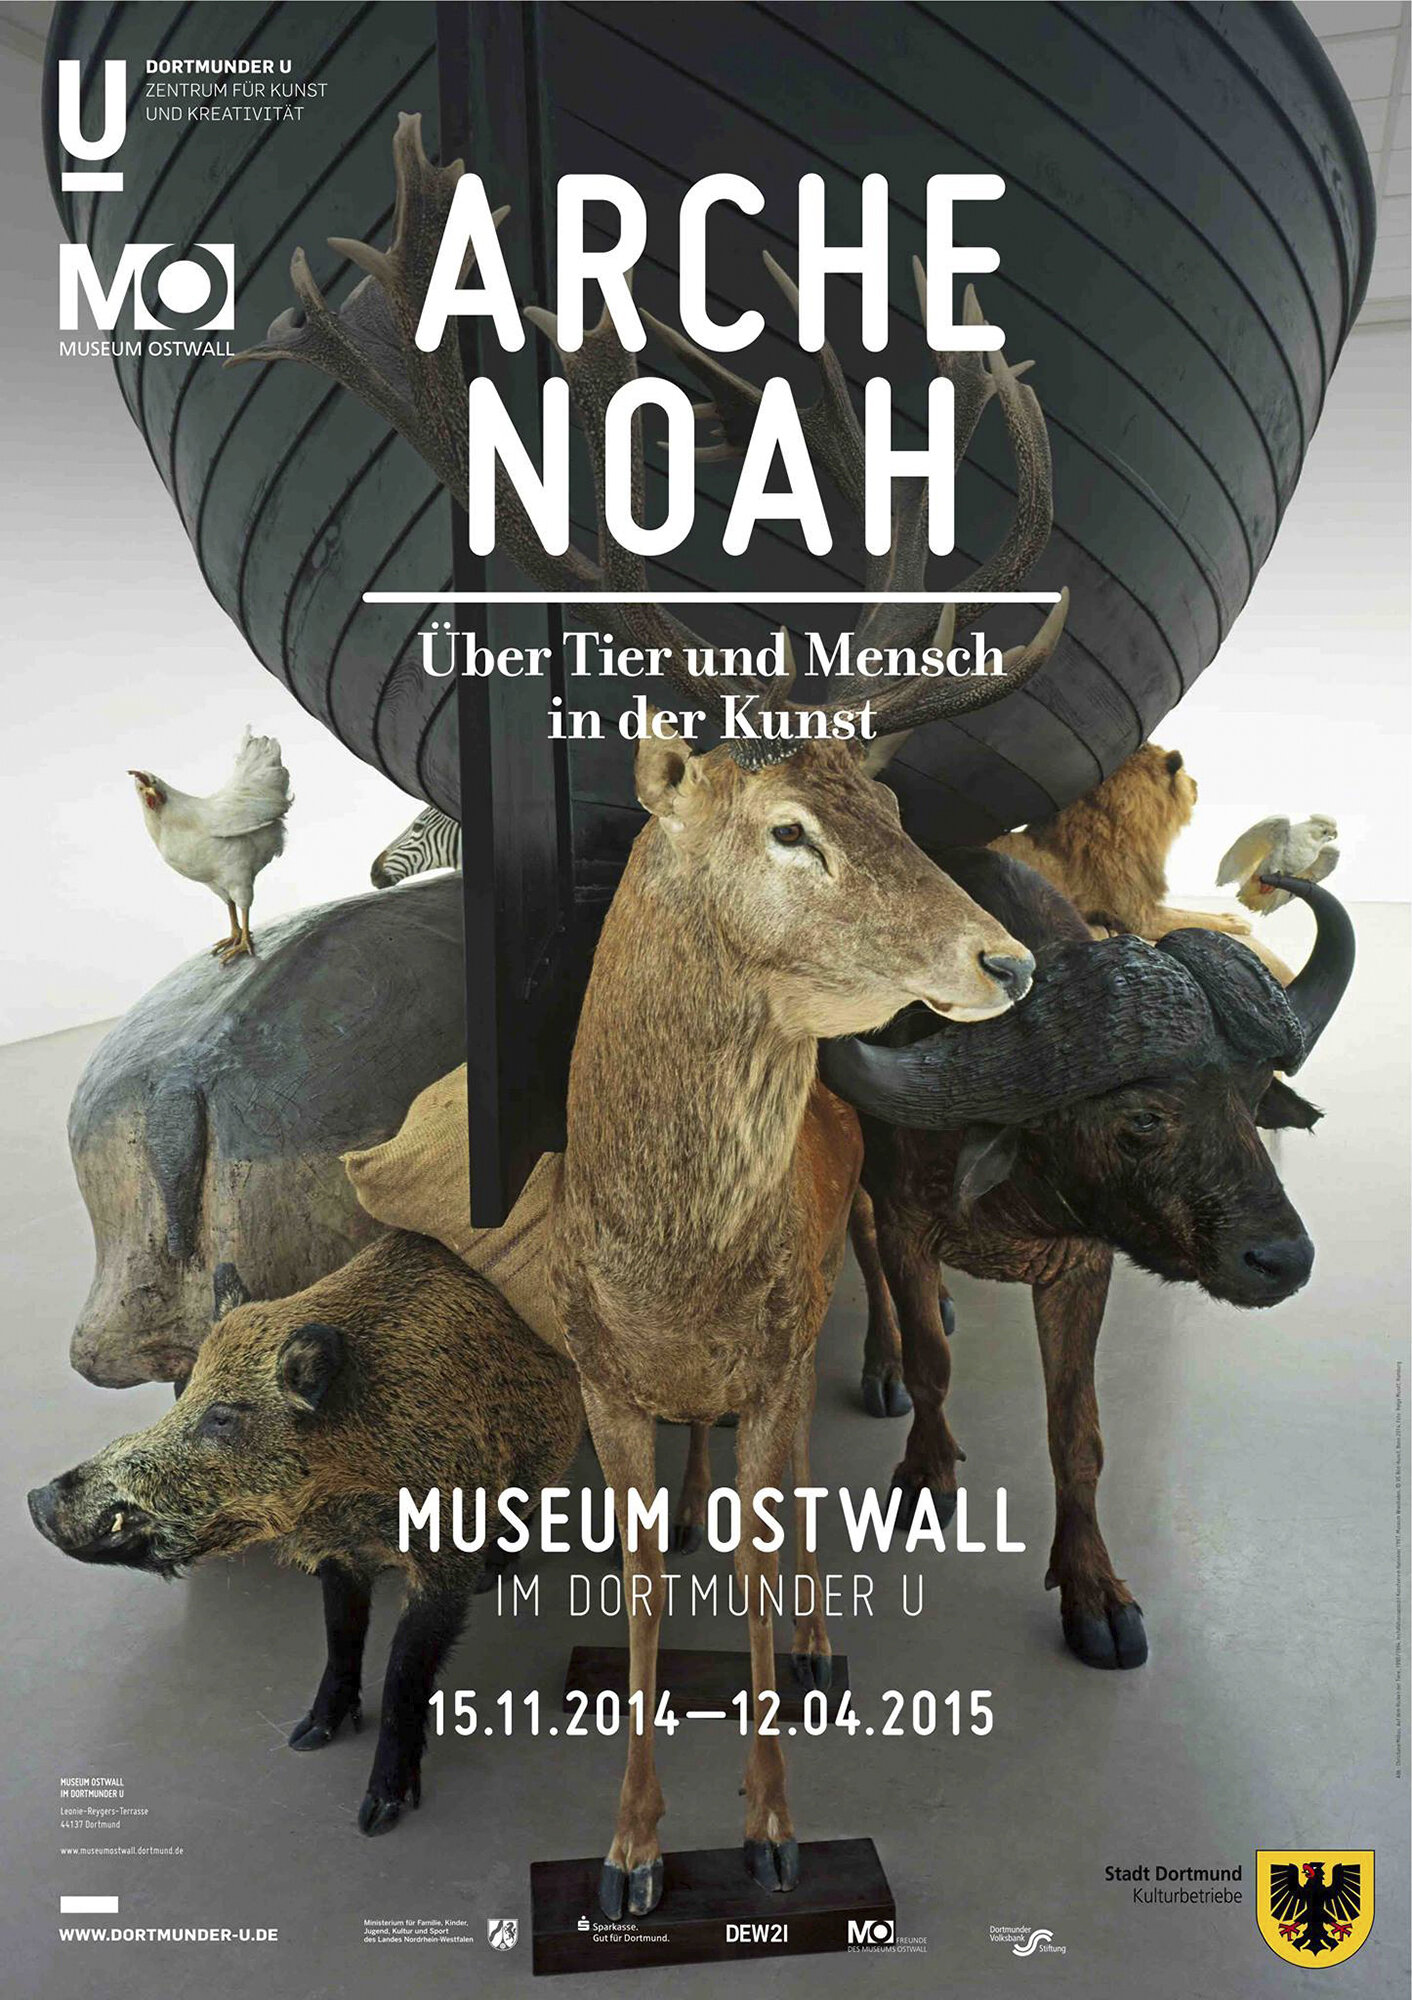 Arche Noah Exhibition Poster.jpg